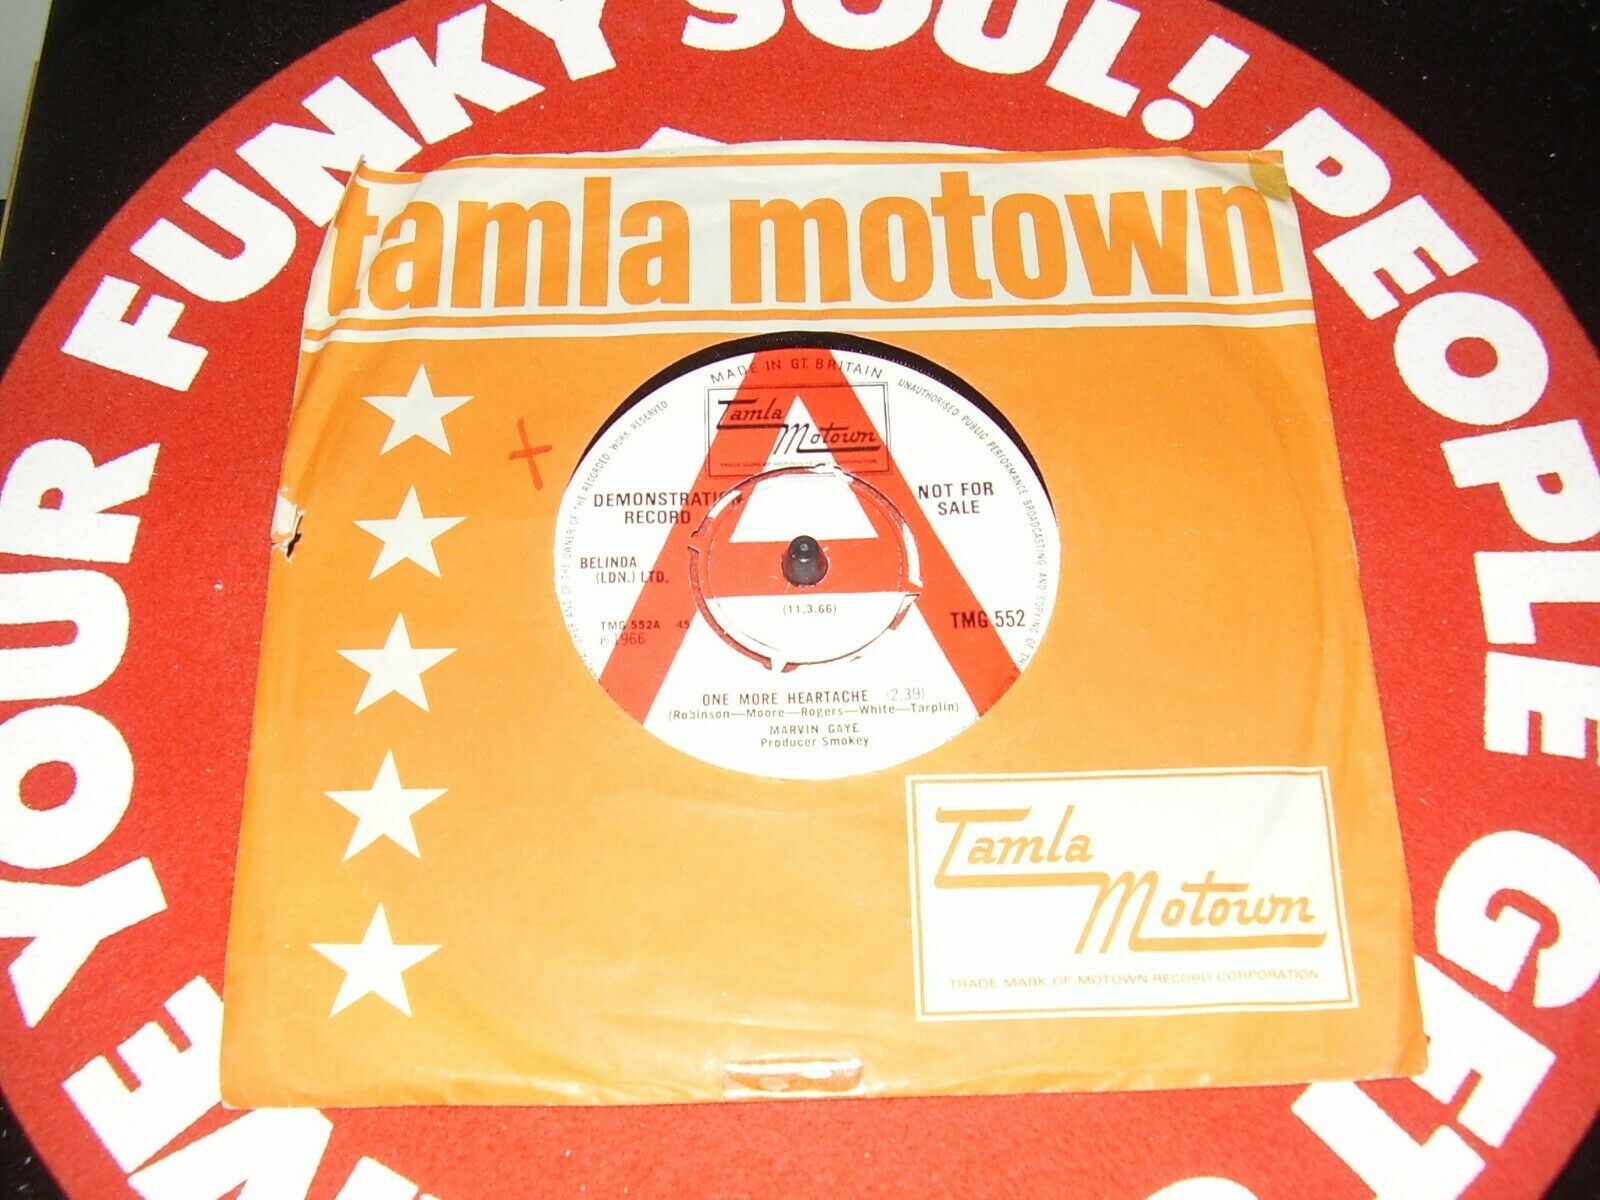 Marvin Gaye -One More Heartache- Demo copy- UK 45 7"l Tamla Motown TMG 552-rare